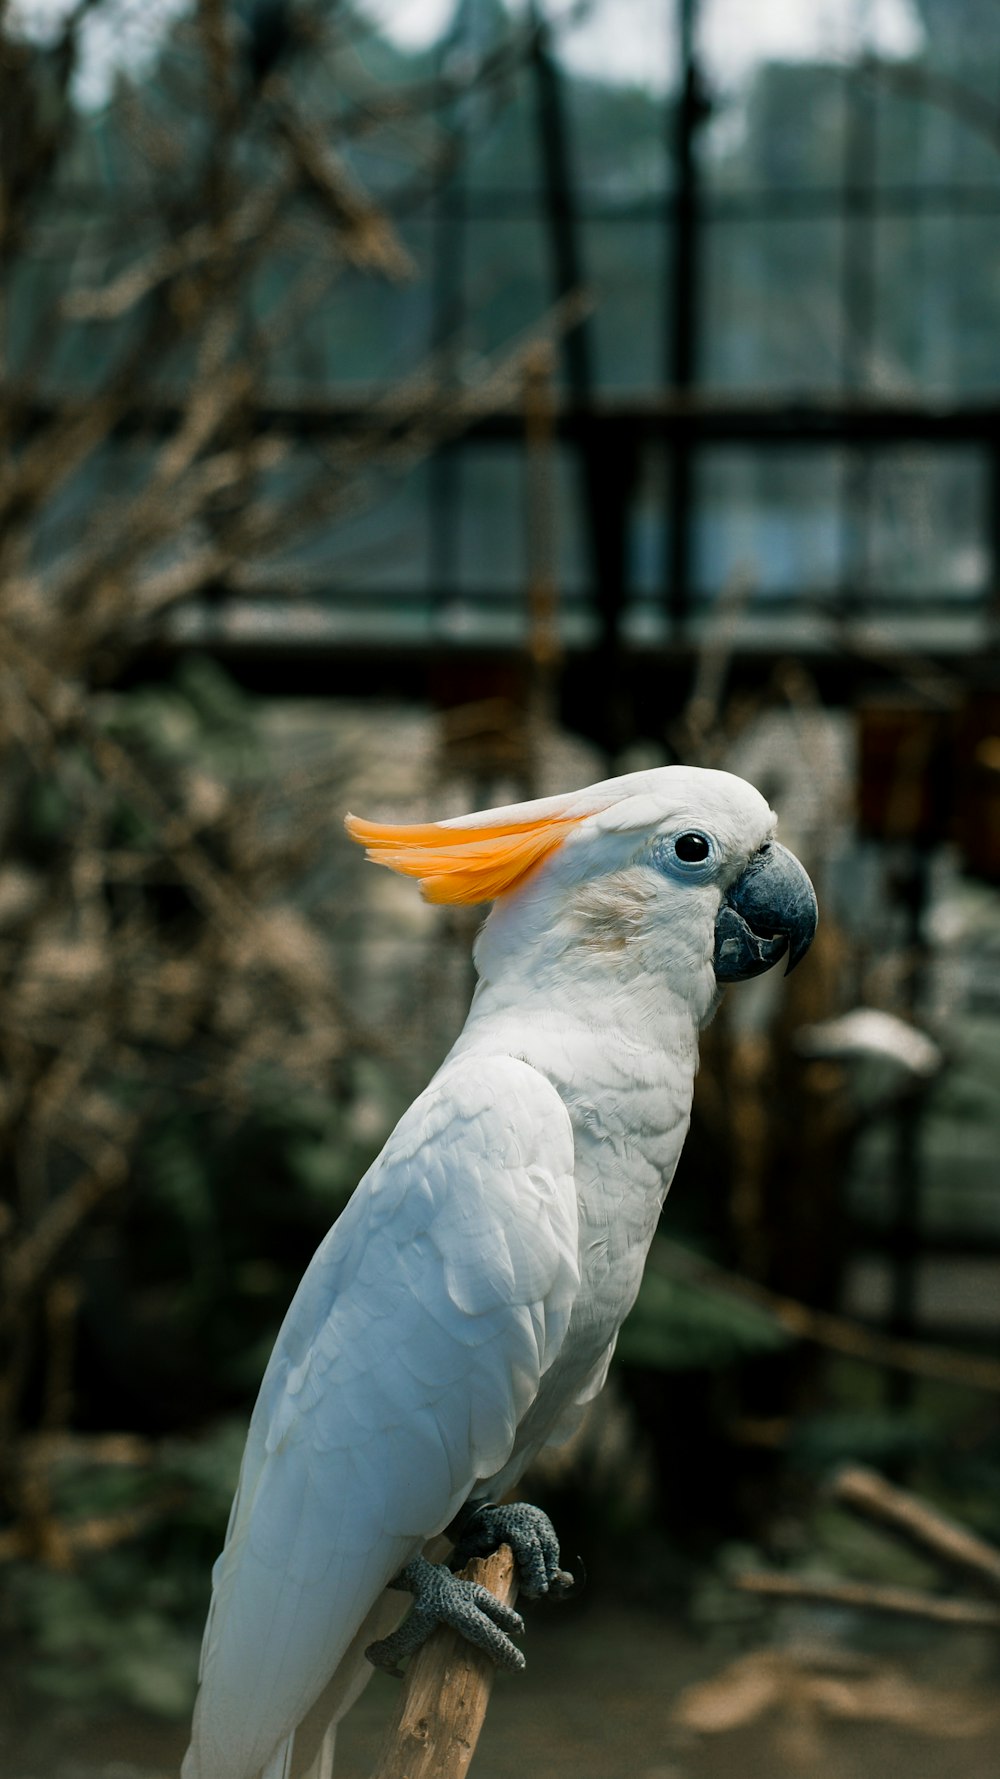 a white bird with an orange beak sitting on a branch